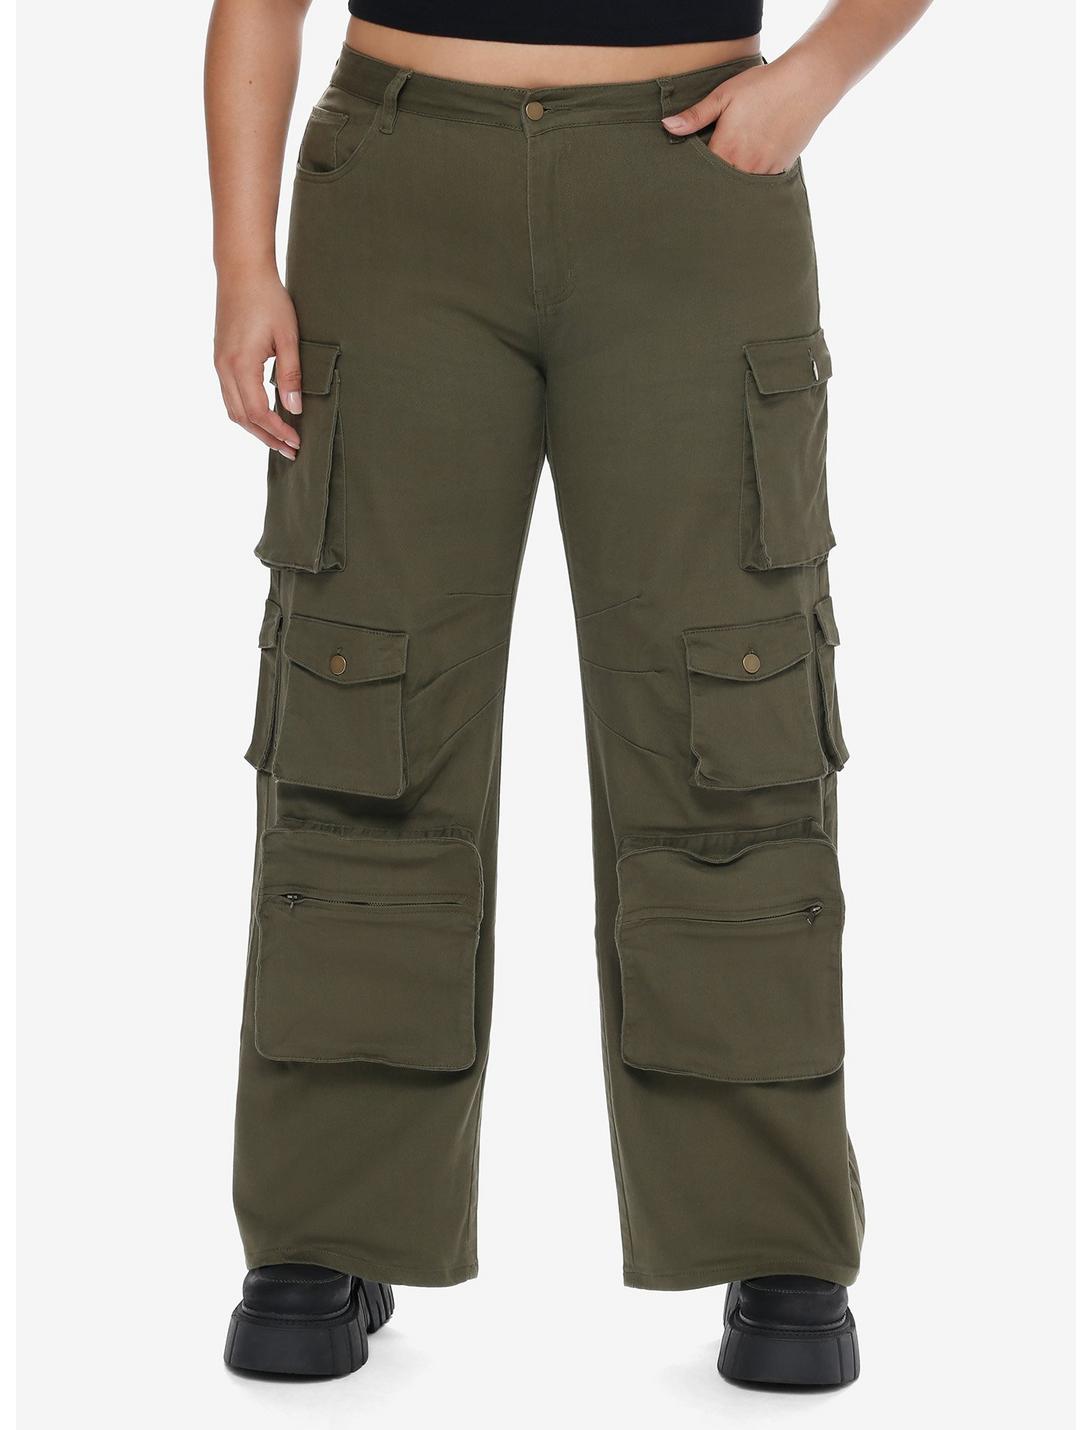 Olive Green Multi-Pocket Girls Cargo Pants Plus Size, GREEN, hi-res